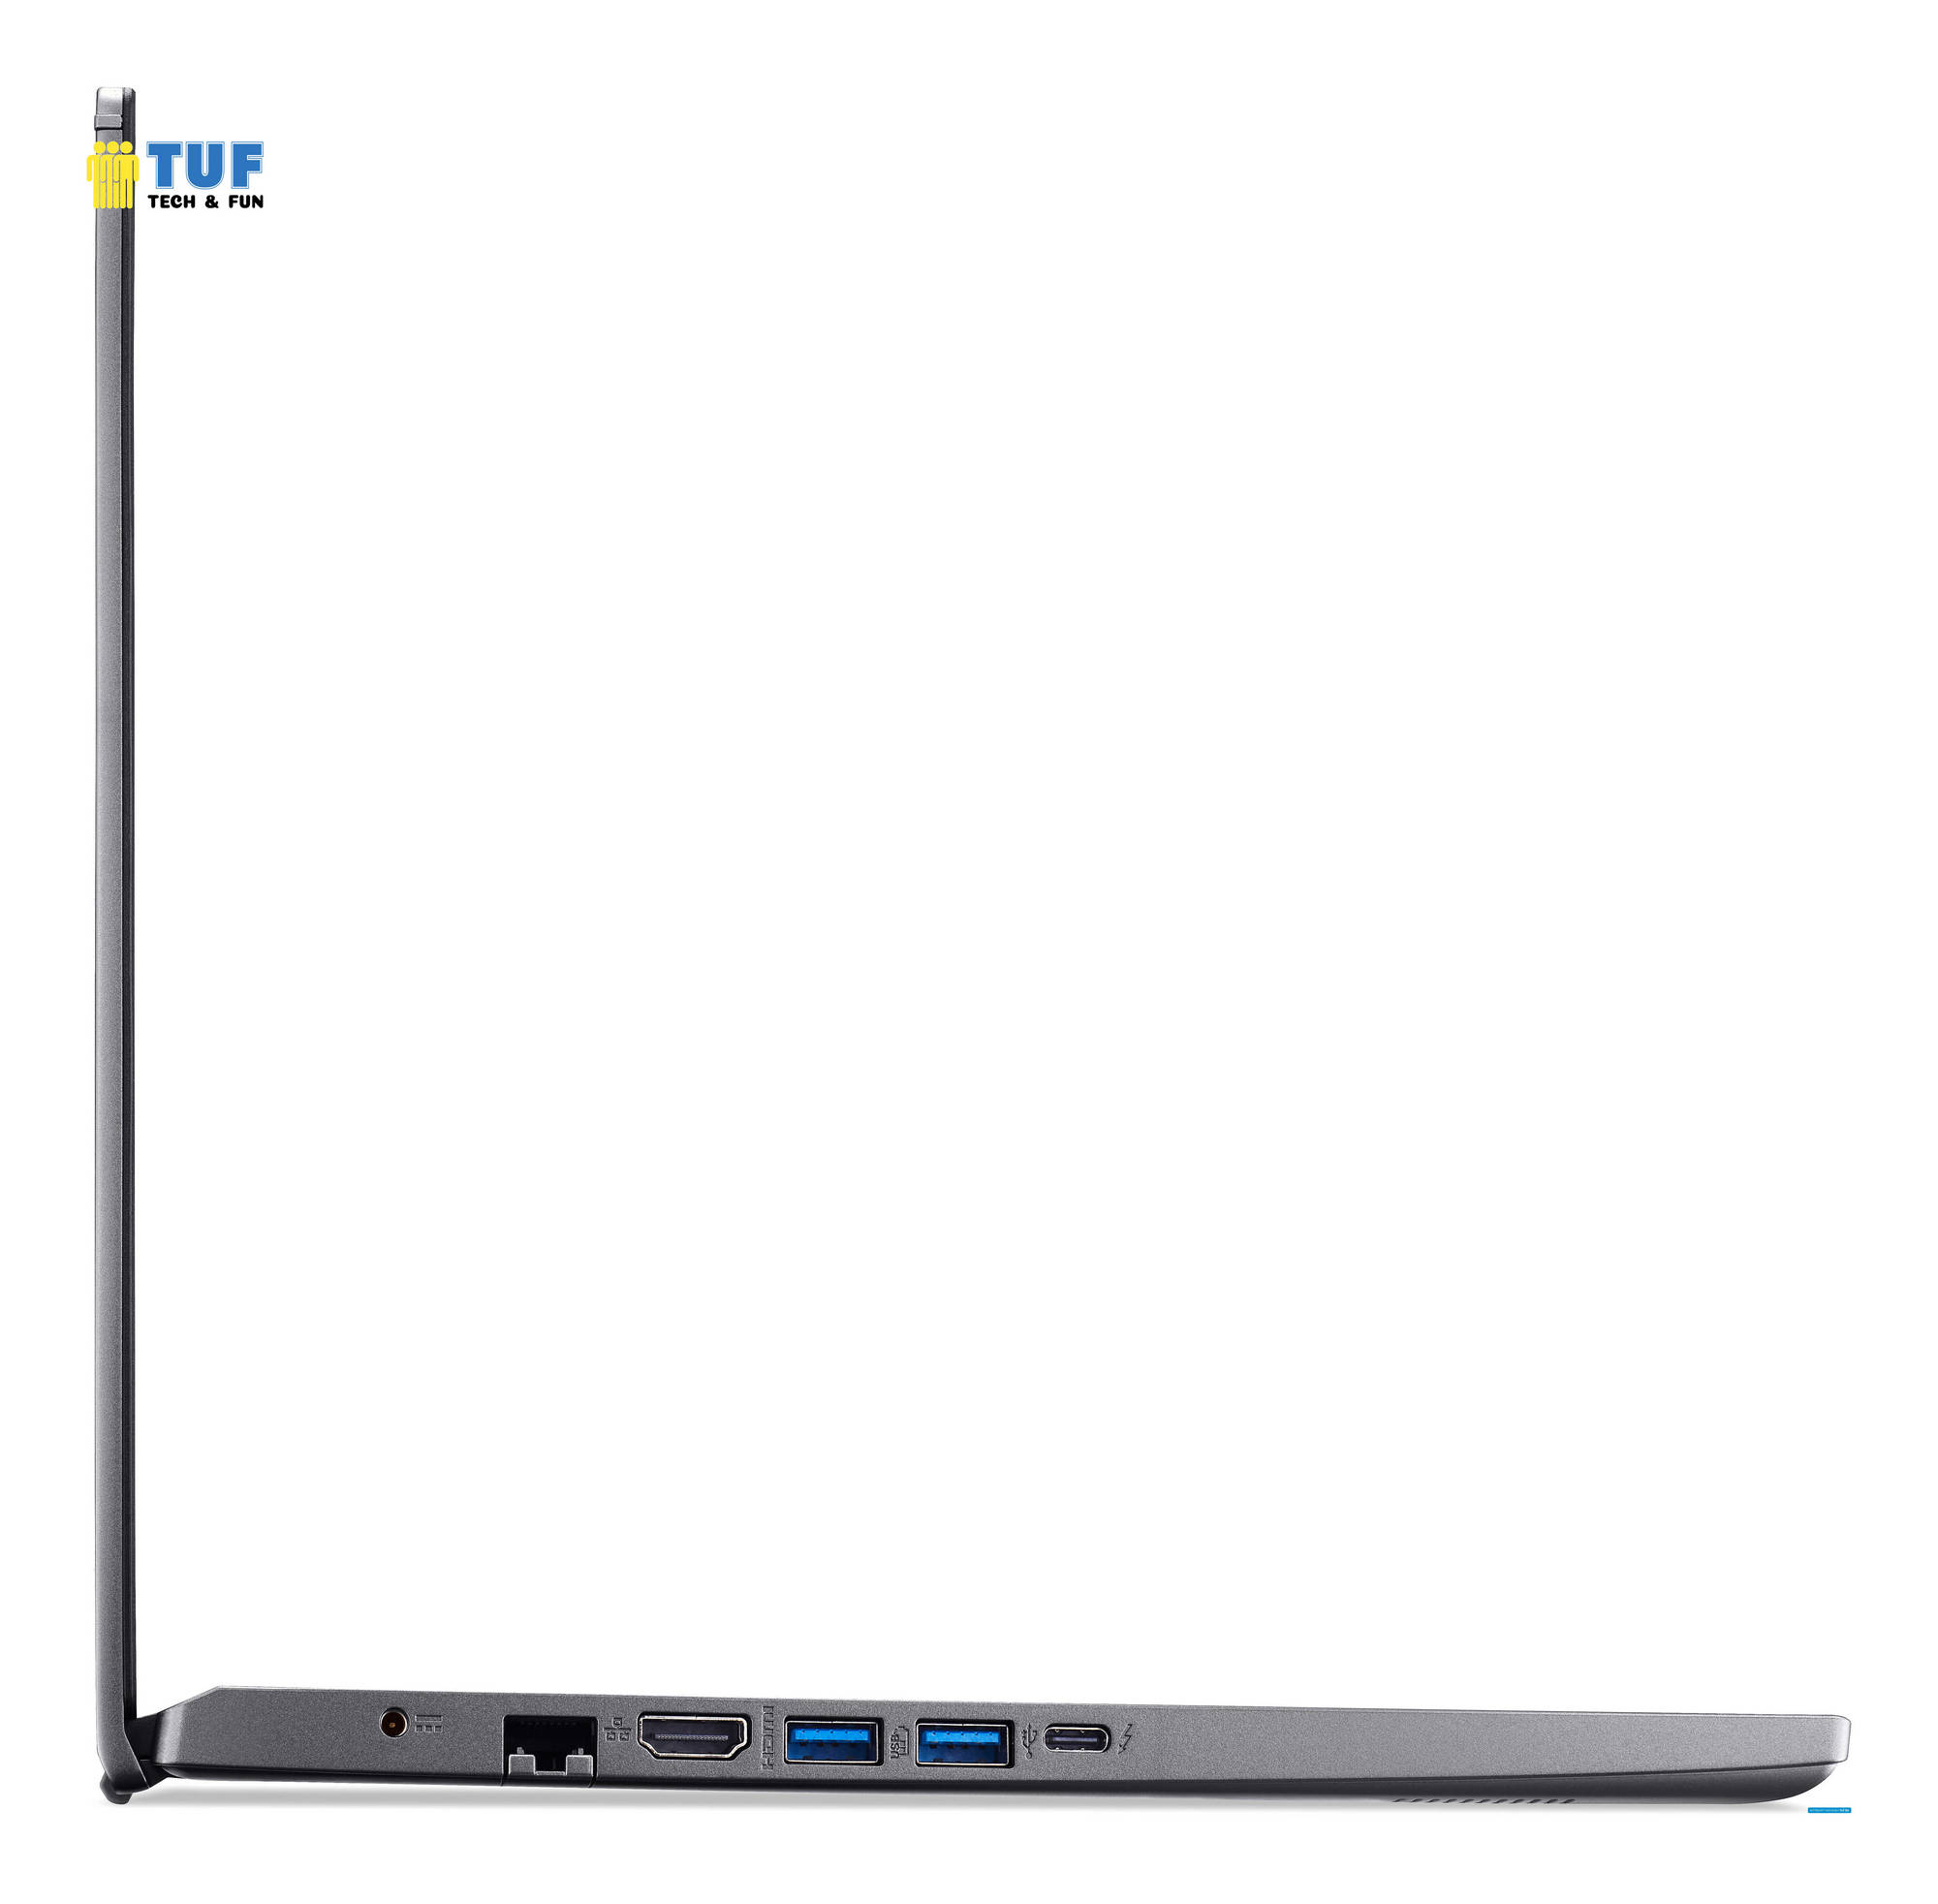 Ноутбук Acer Aspire 5 A515-57-56NV NX.K9LER.003